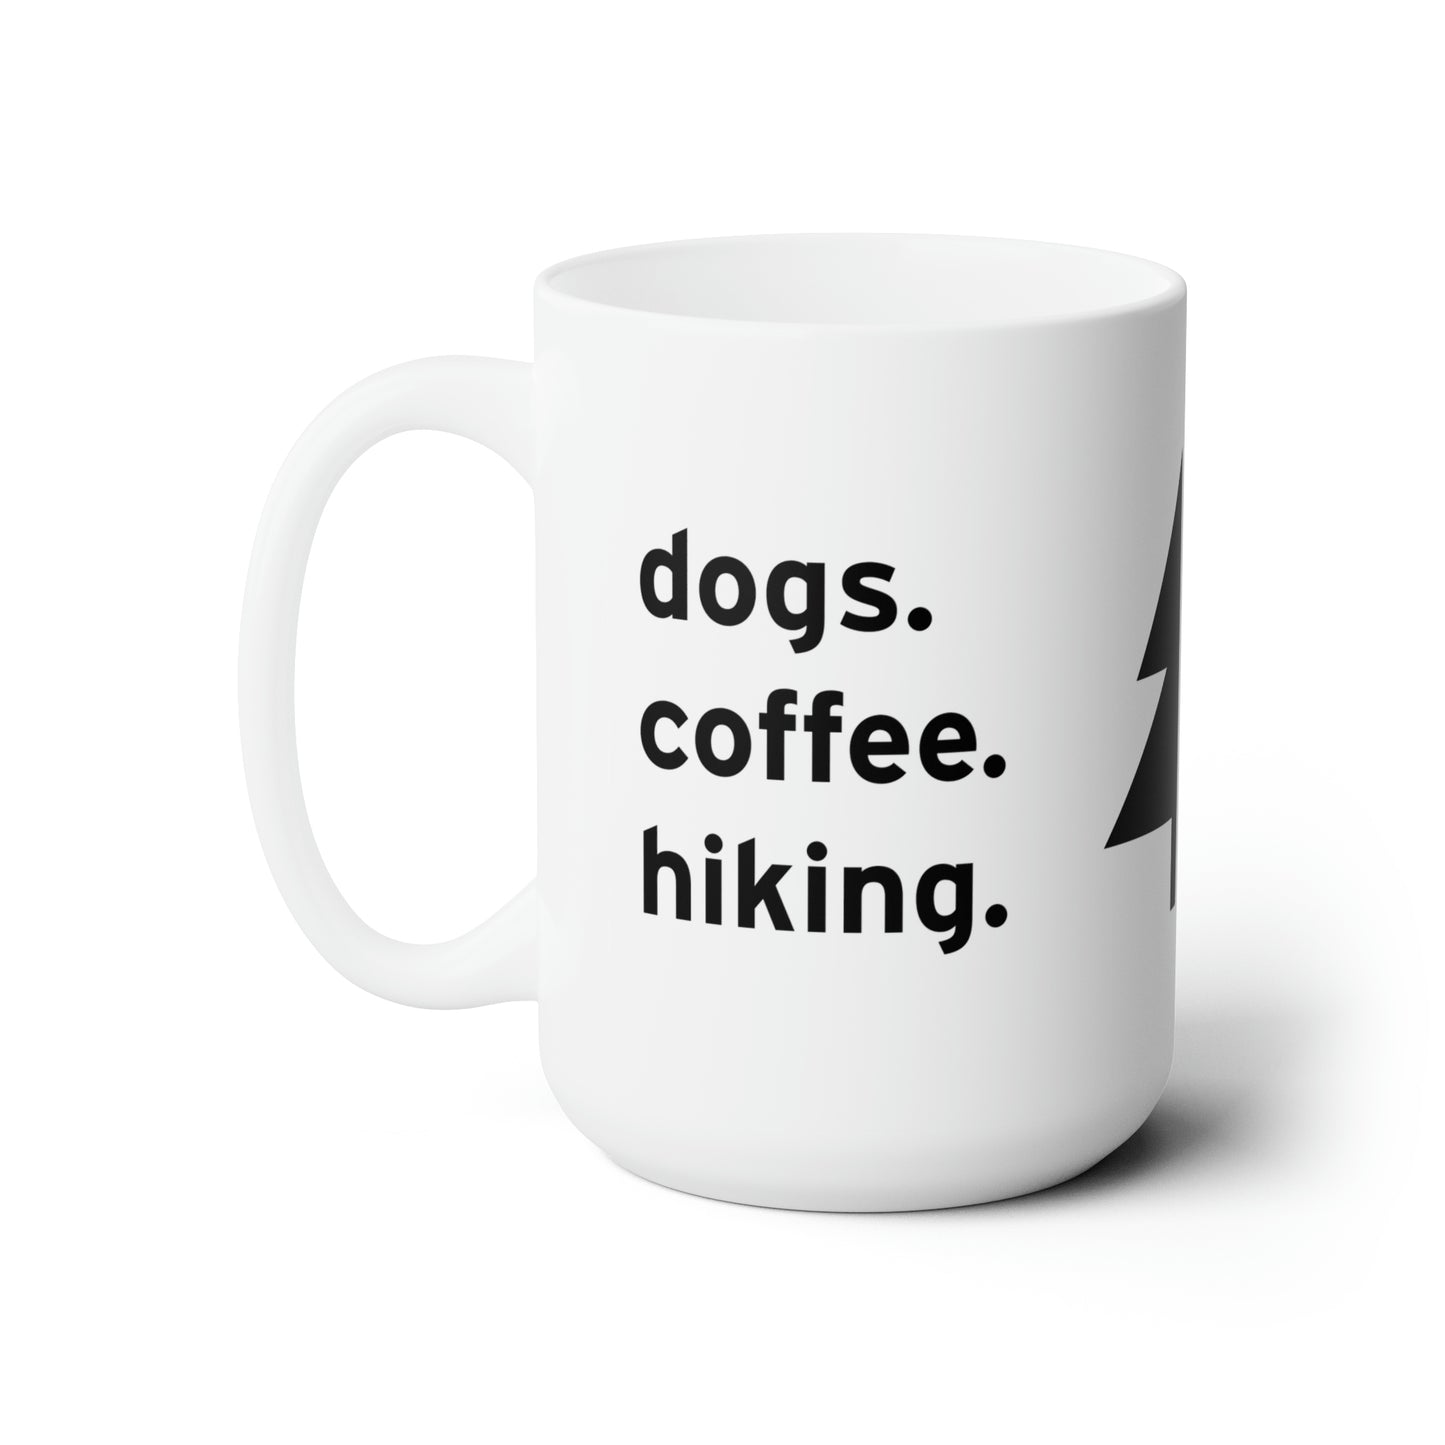 Dogs Coffee Hiking Ceramic Mug 15oz